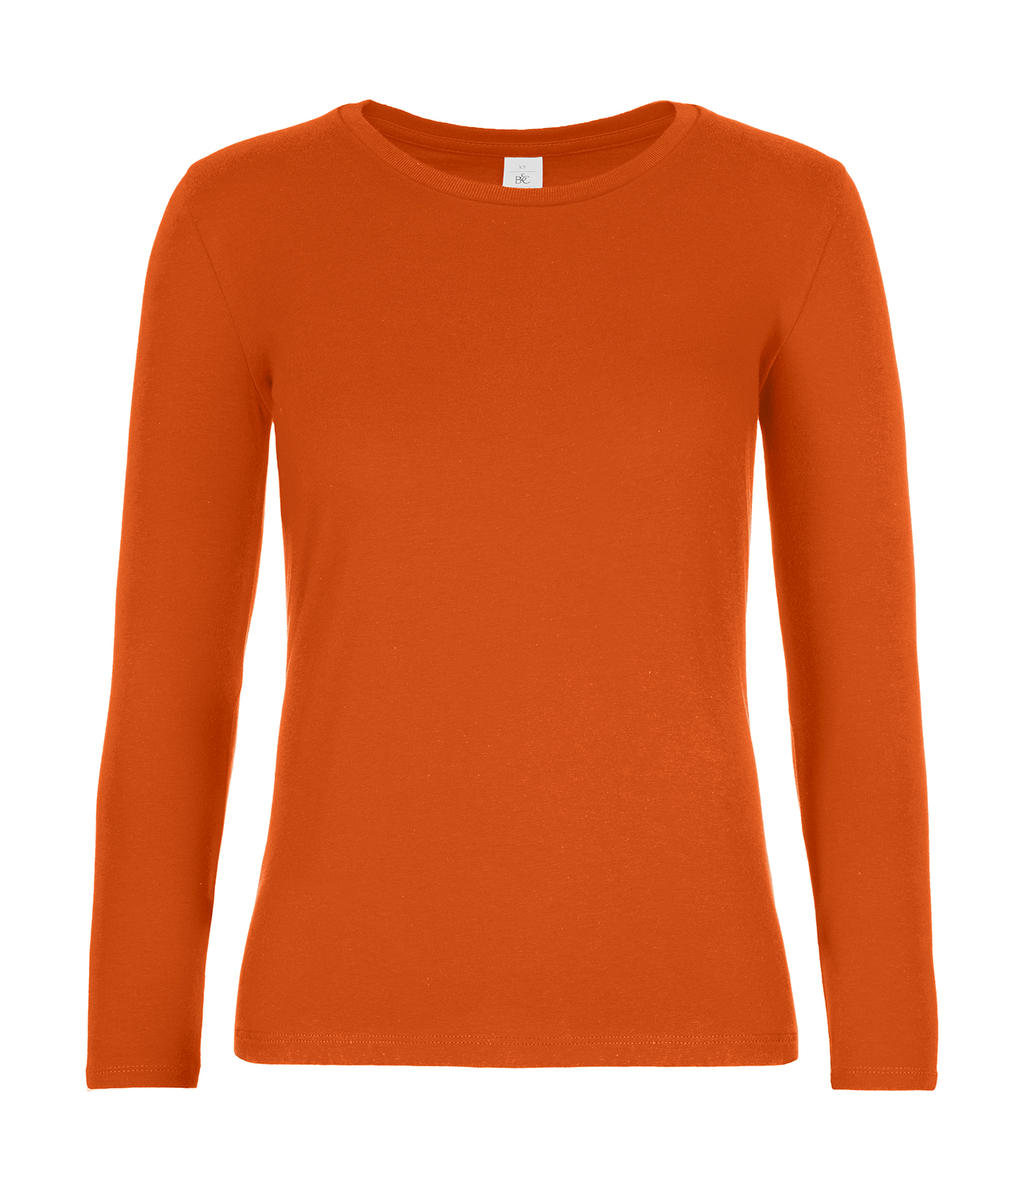 Dámske tričko s dlhými rukávmi #E190 - urban orange